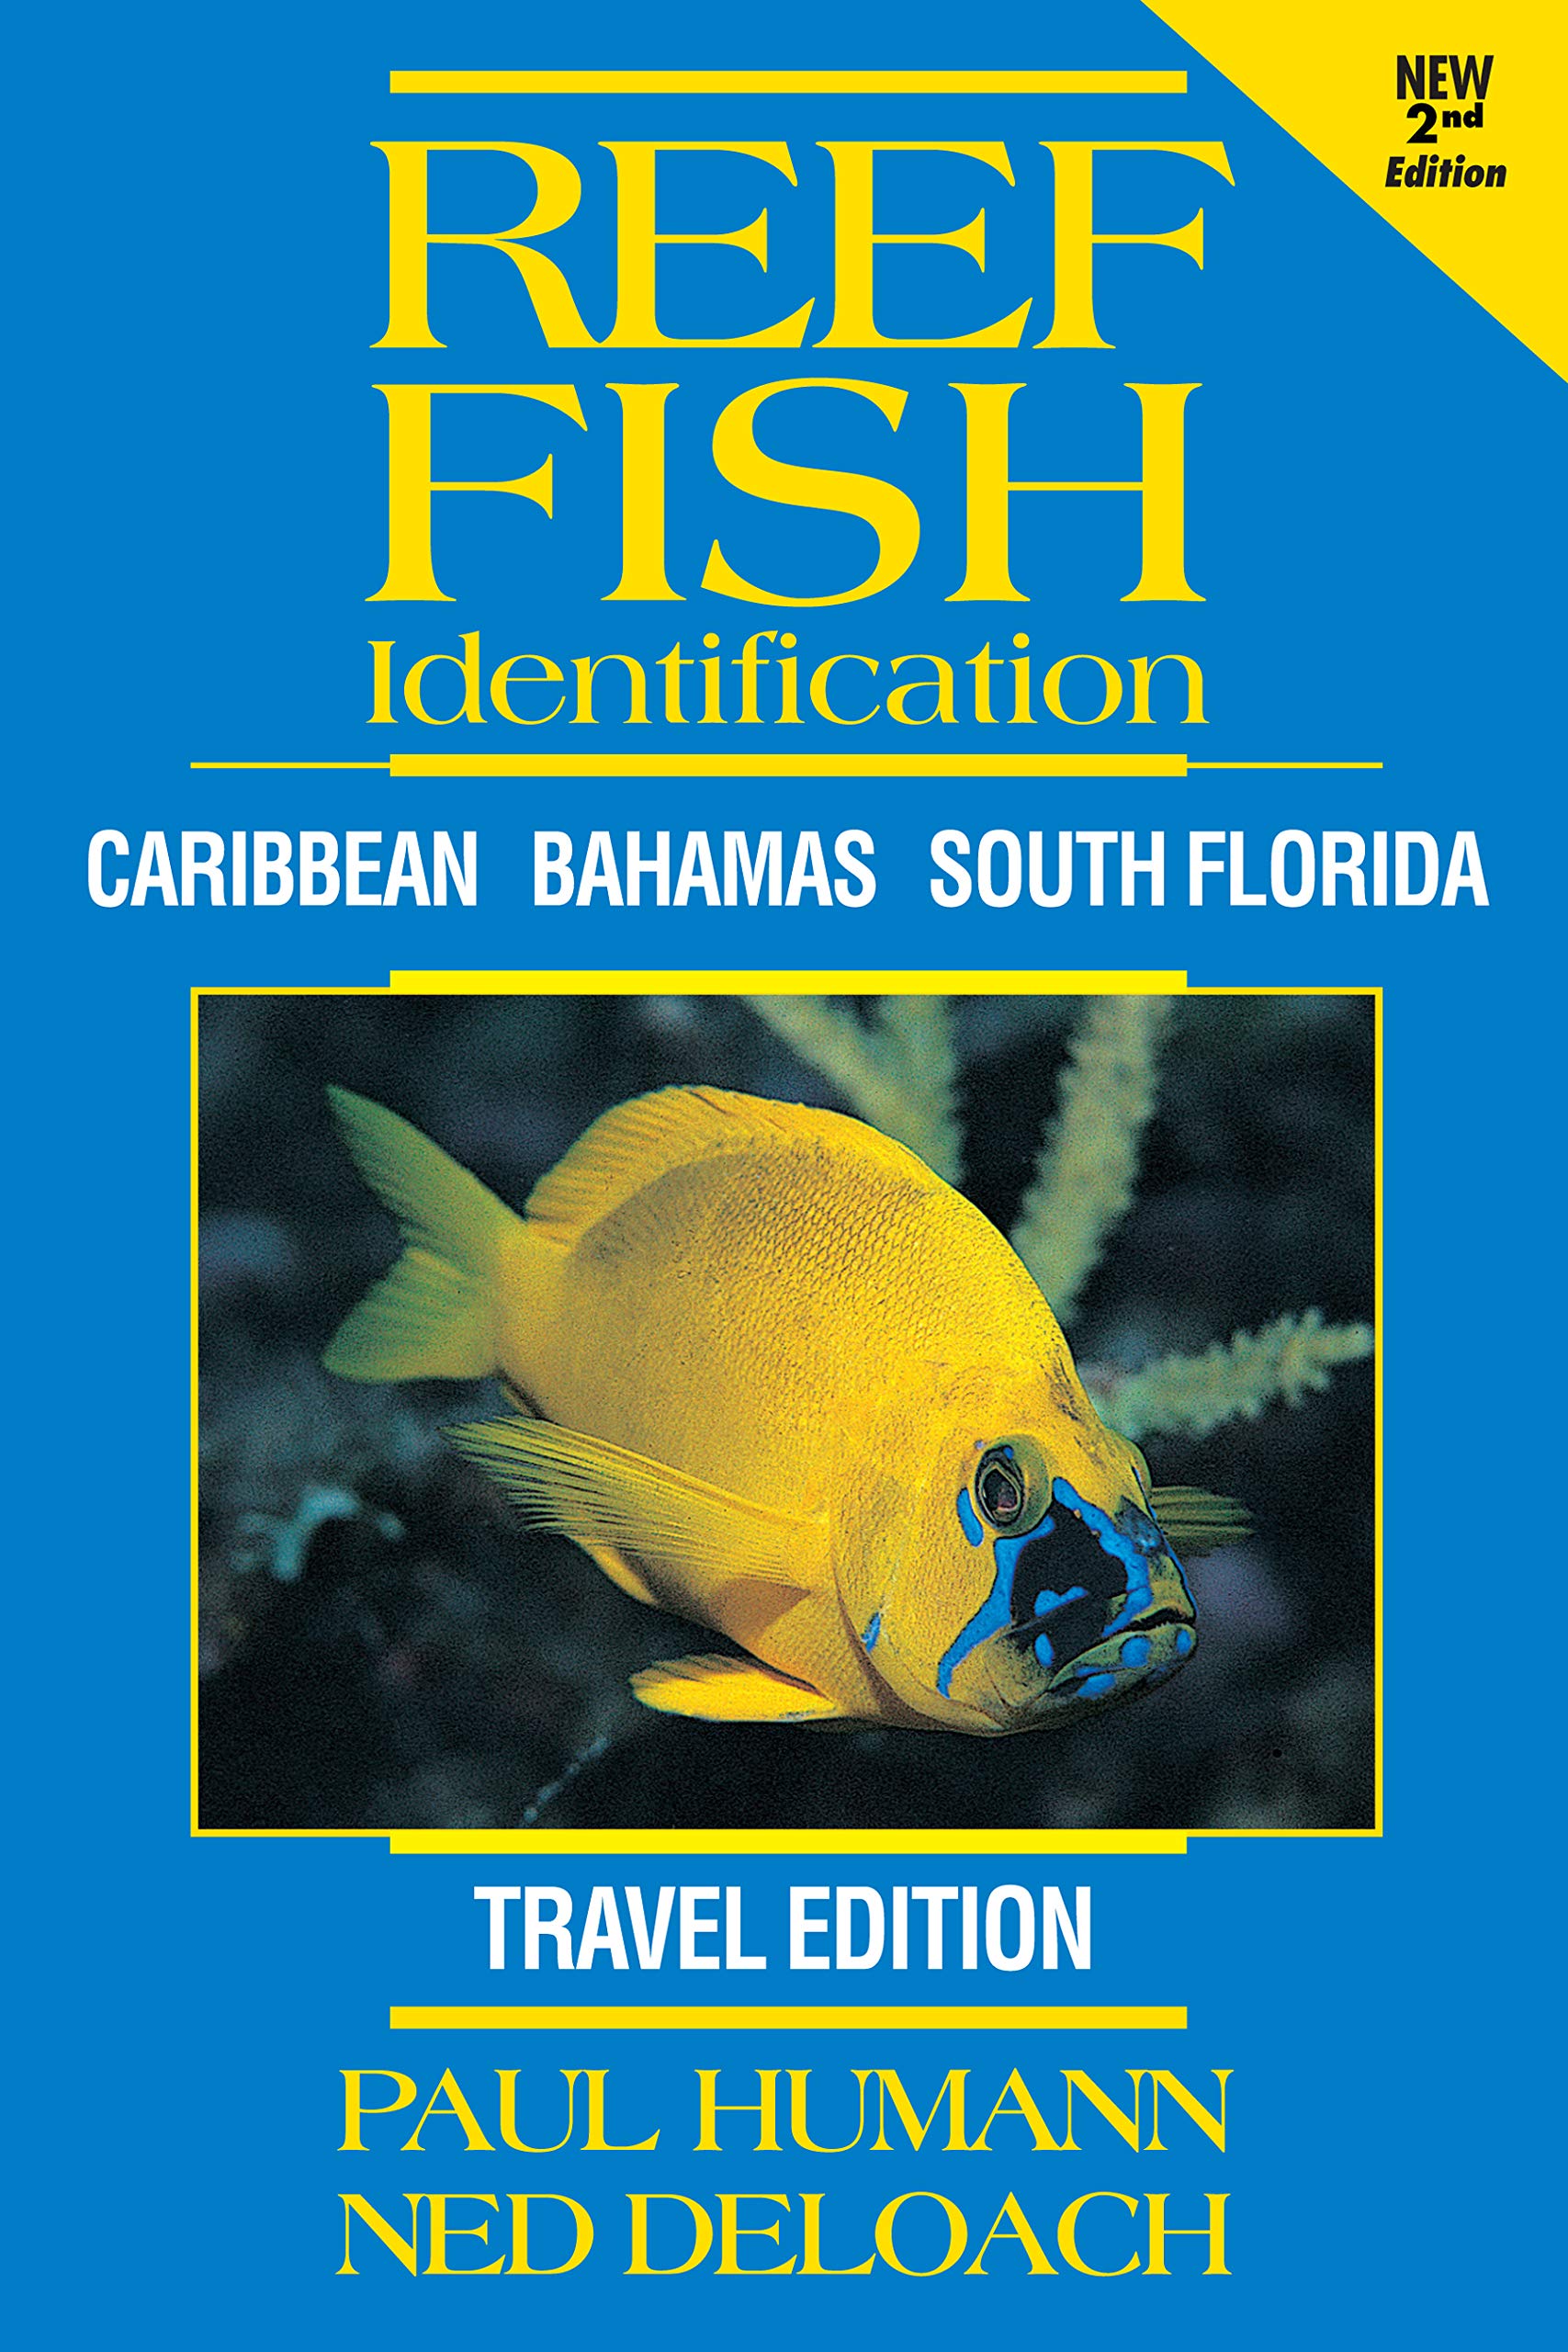 Reef Fish Identification Travel Edition - 2nd Edition: Caribbean Bahamas South Florida